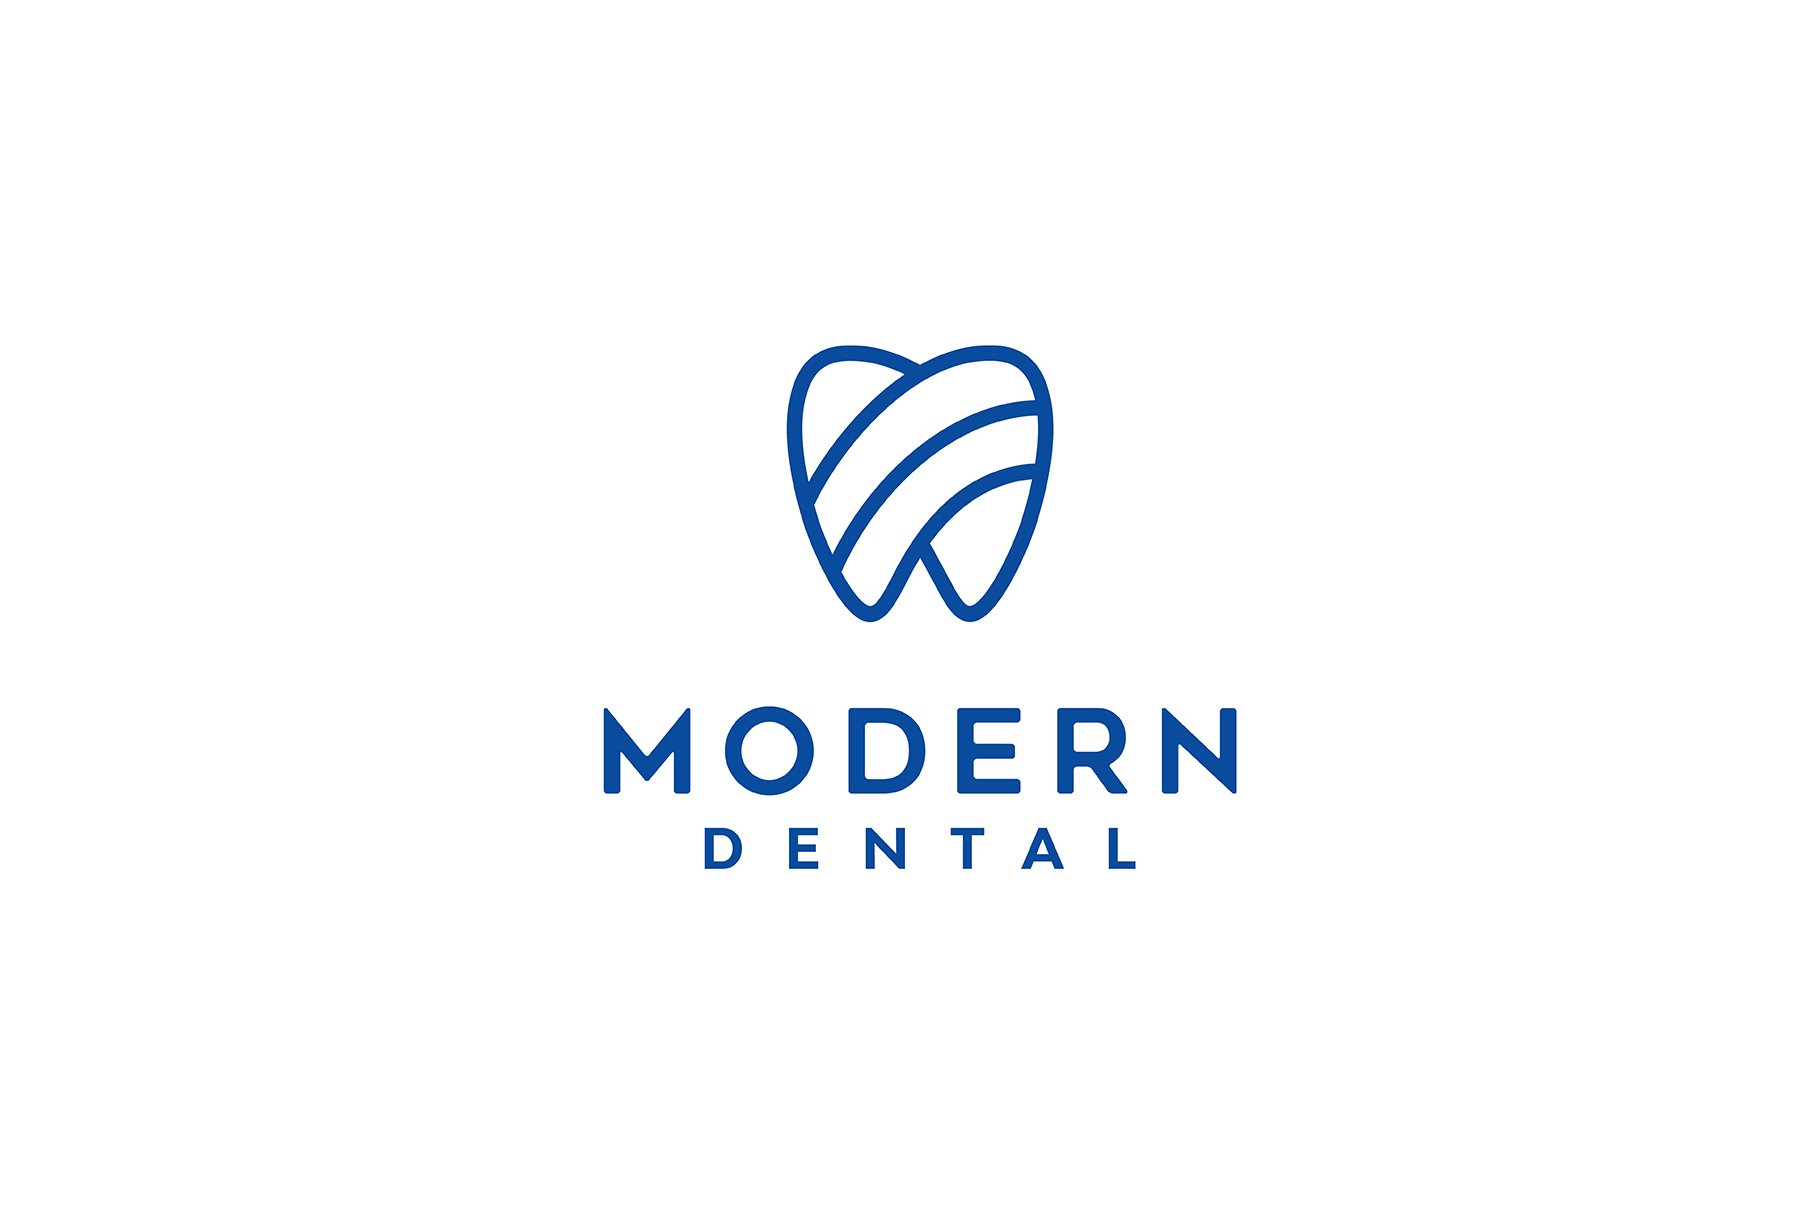 Modern Dental Logo Design Vector cover image.